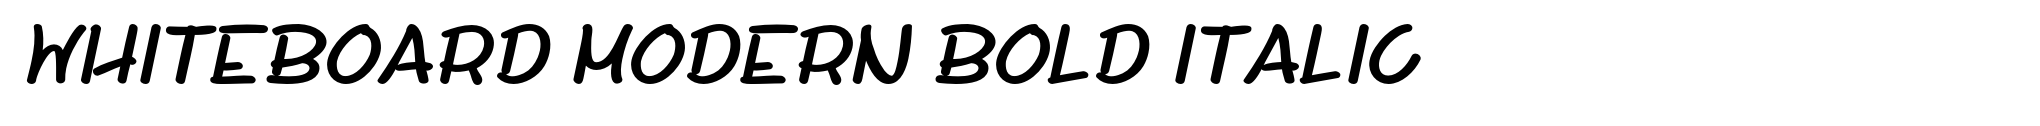 Whiteboard Modern Bold Italic image